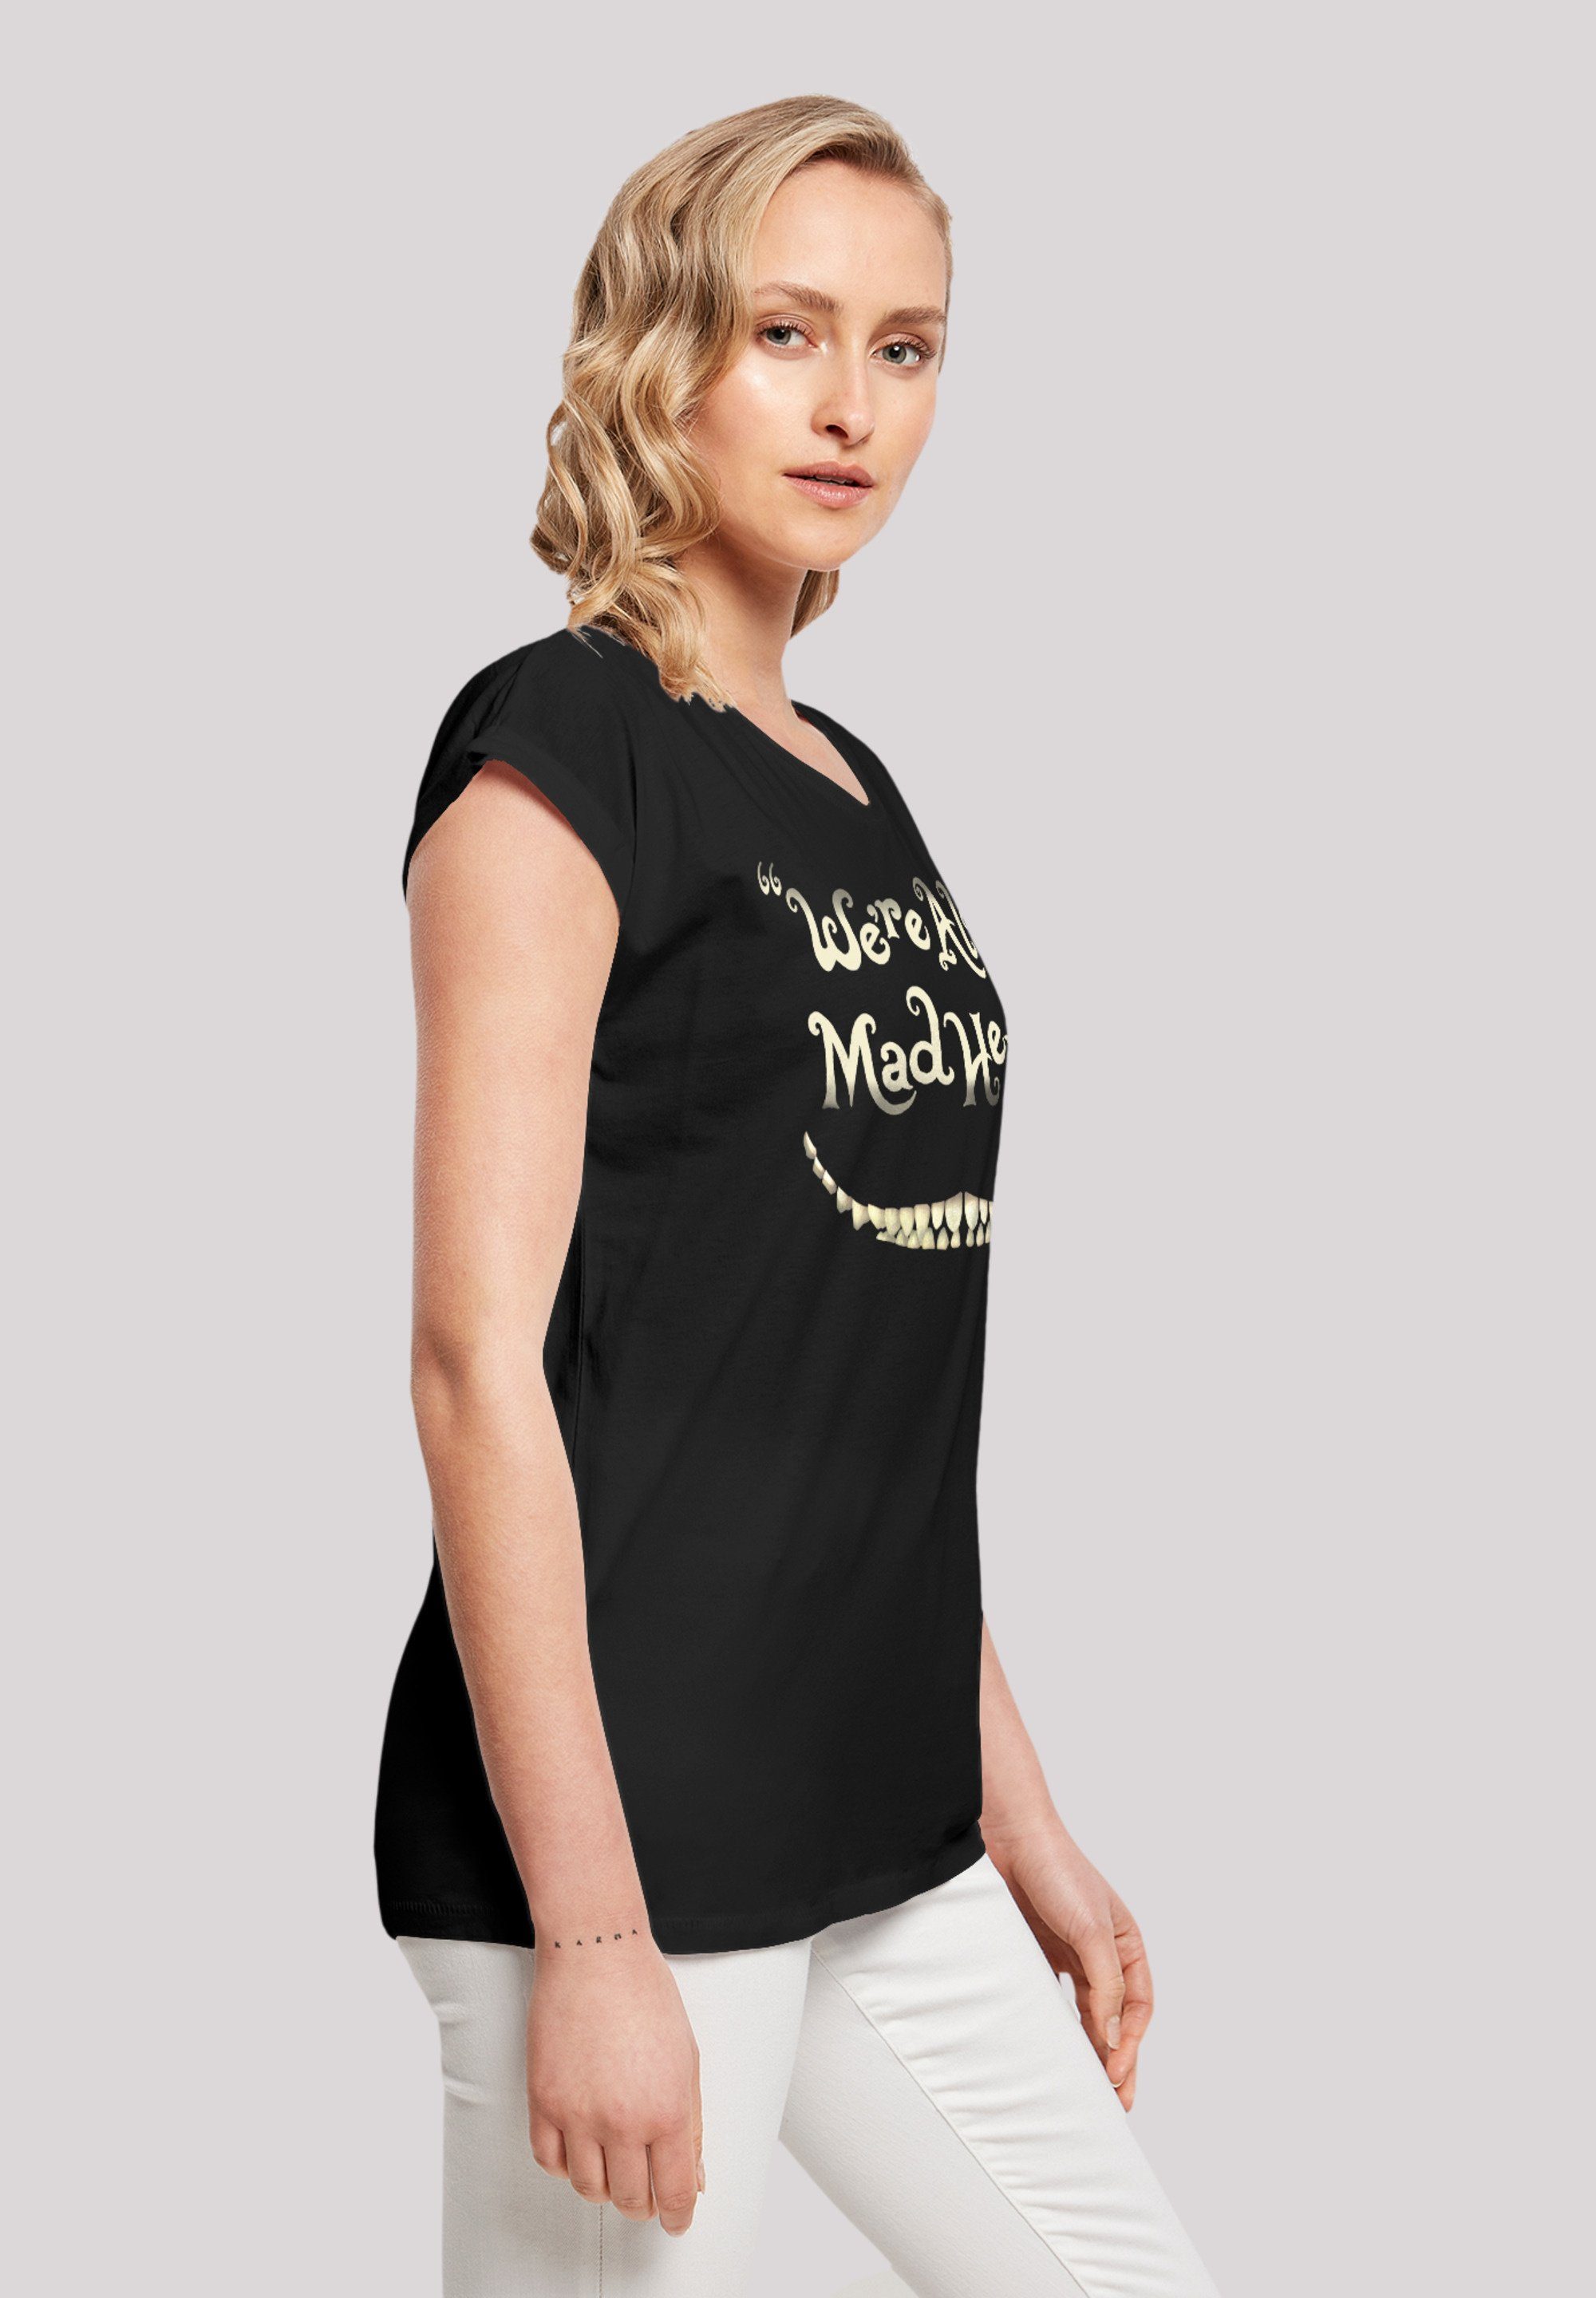 Wunderland F4NT4STIC T-Shirt Premium im Here Qualität Disney Mad Alice Smile